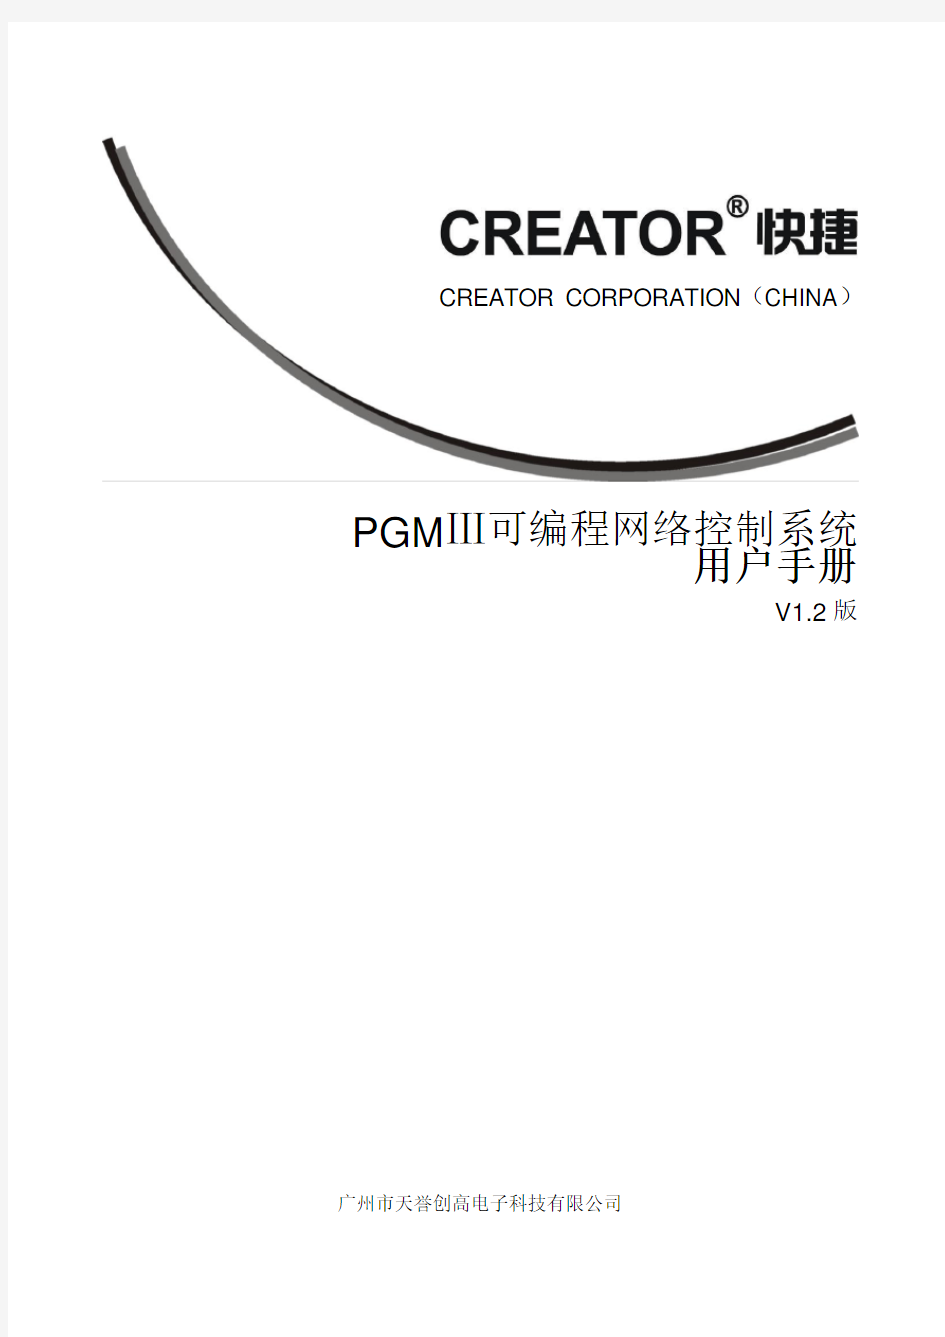 PGMIII控制系统用户手册V1.2版